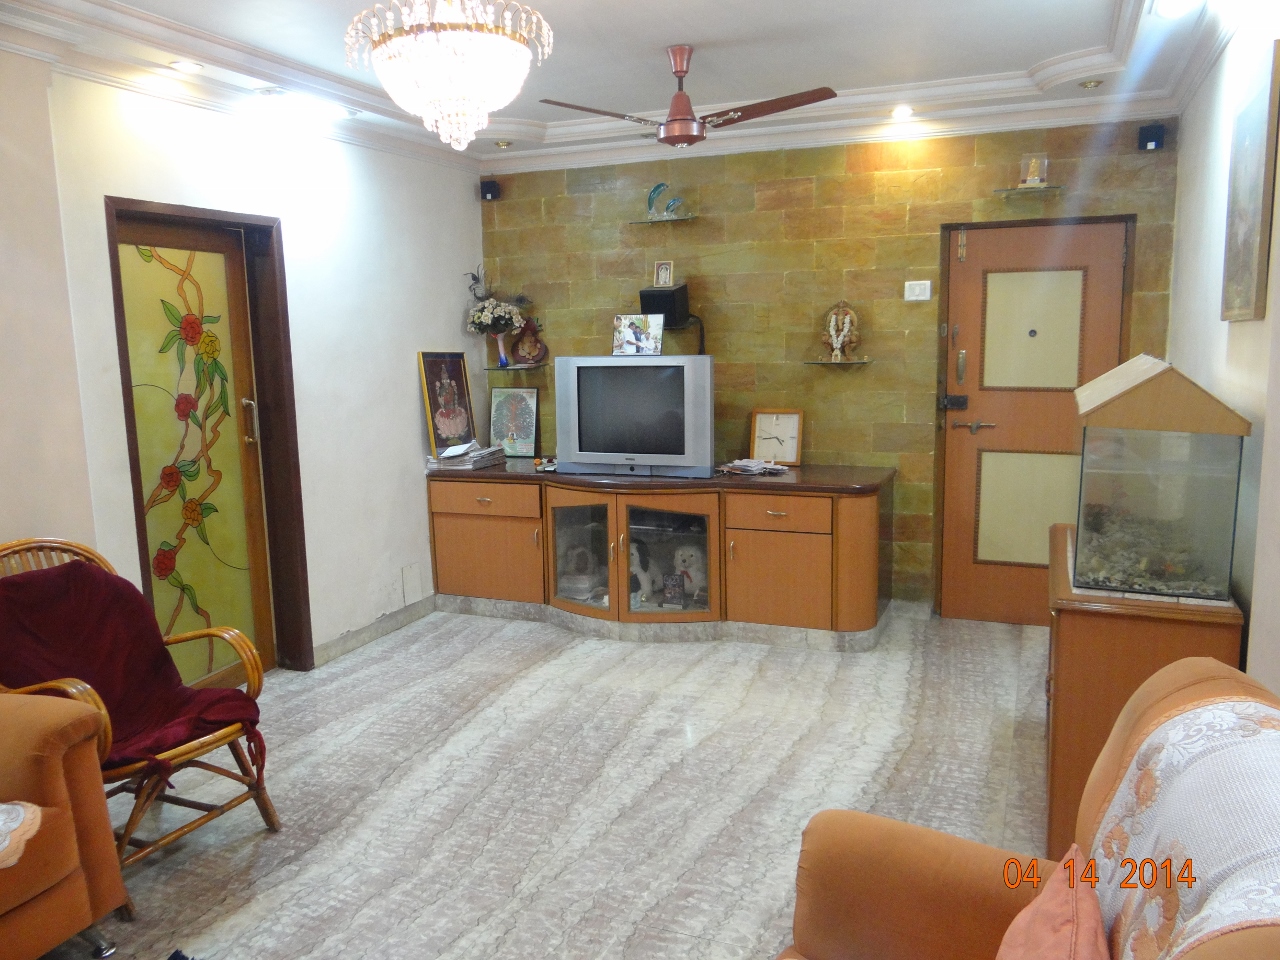 Residential Multistorey Apartment for Sale in Airoli sector 14 , Airoli-West, Mumbai